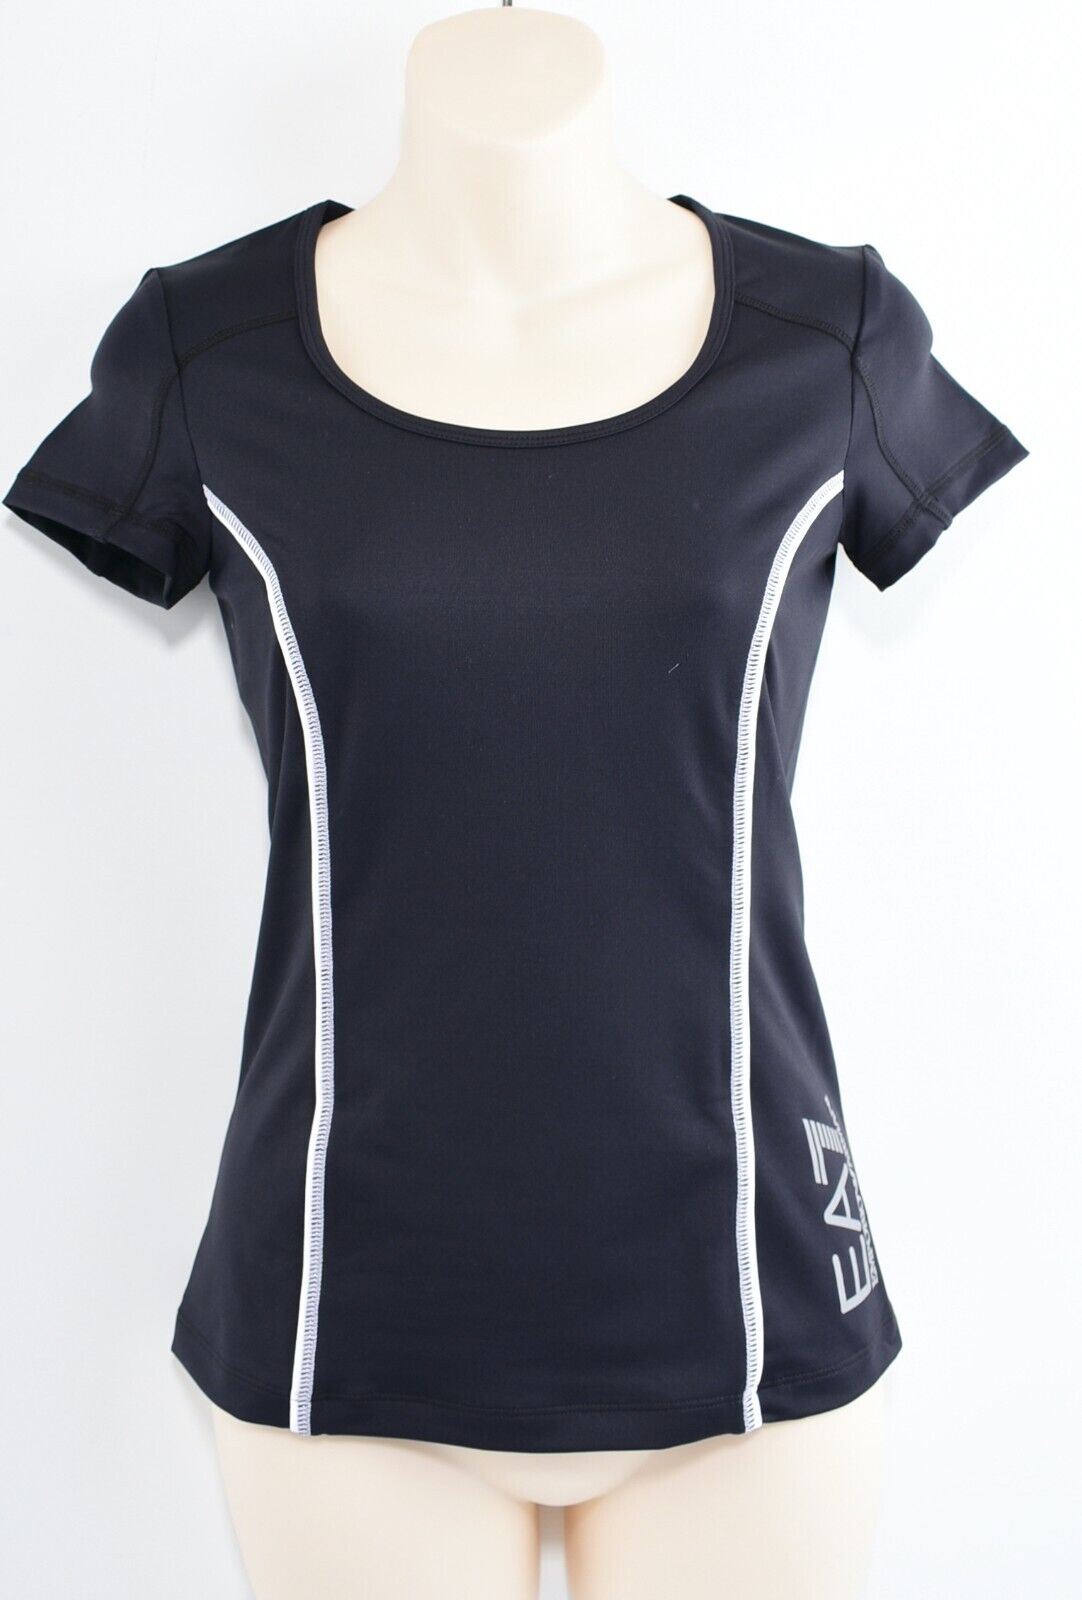 EA7 EMPORIO ARMANI Women's VIGOR Performance T-shirt Tee, Black, size XS /UK 8